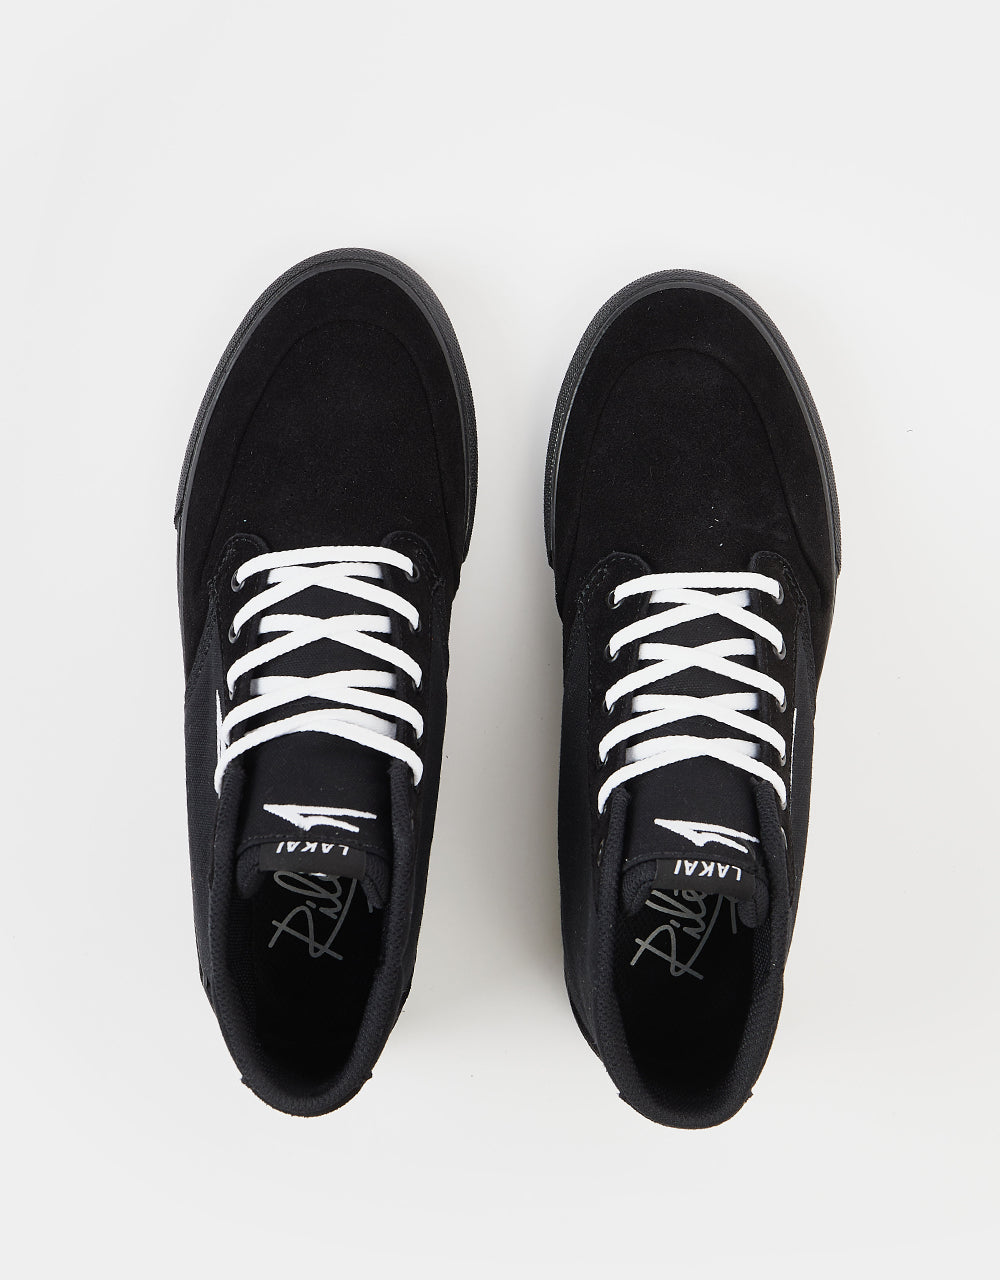 Lakai Riley 3 High Skate Shoes - Black/Black Suede